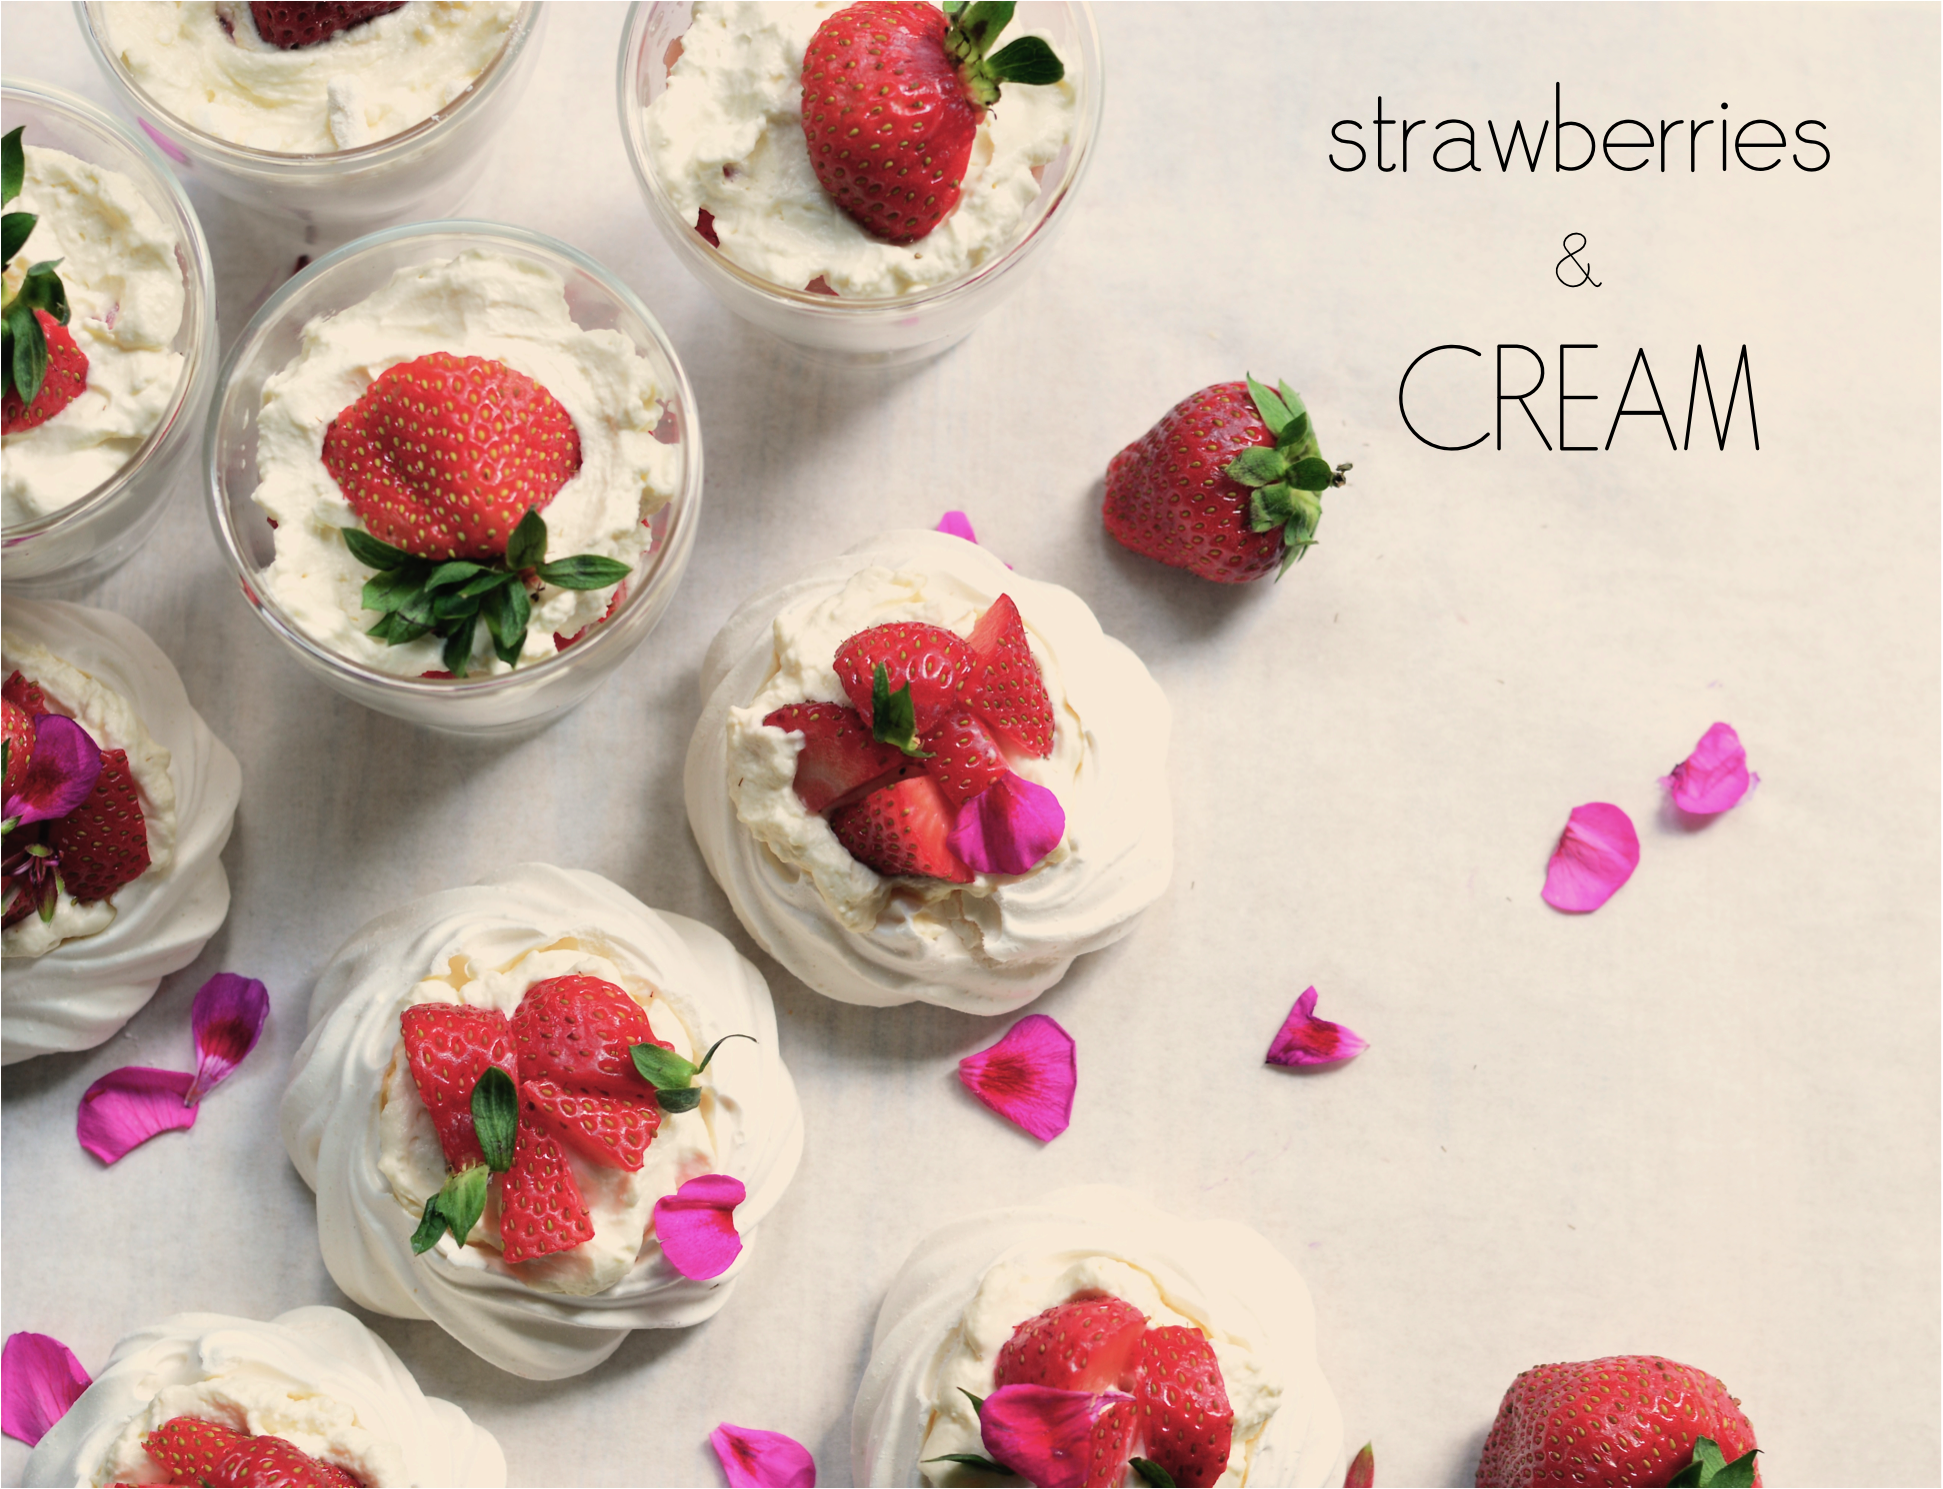 "strawberries and cream presentation"